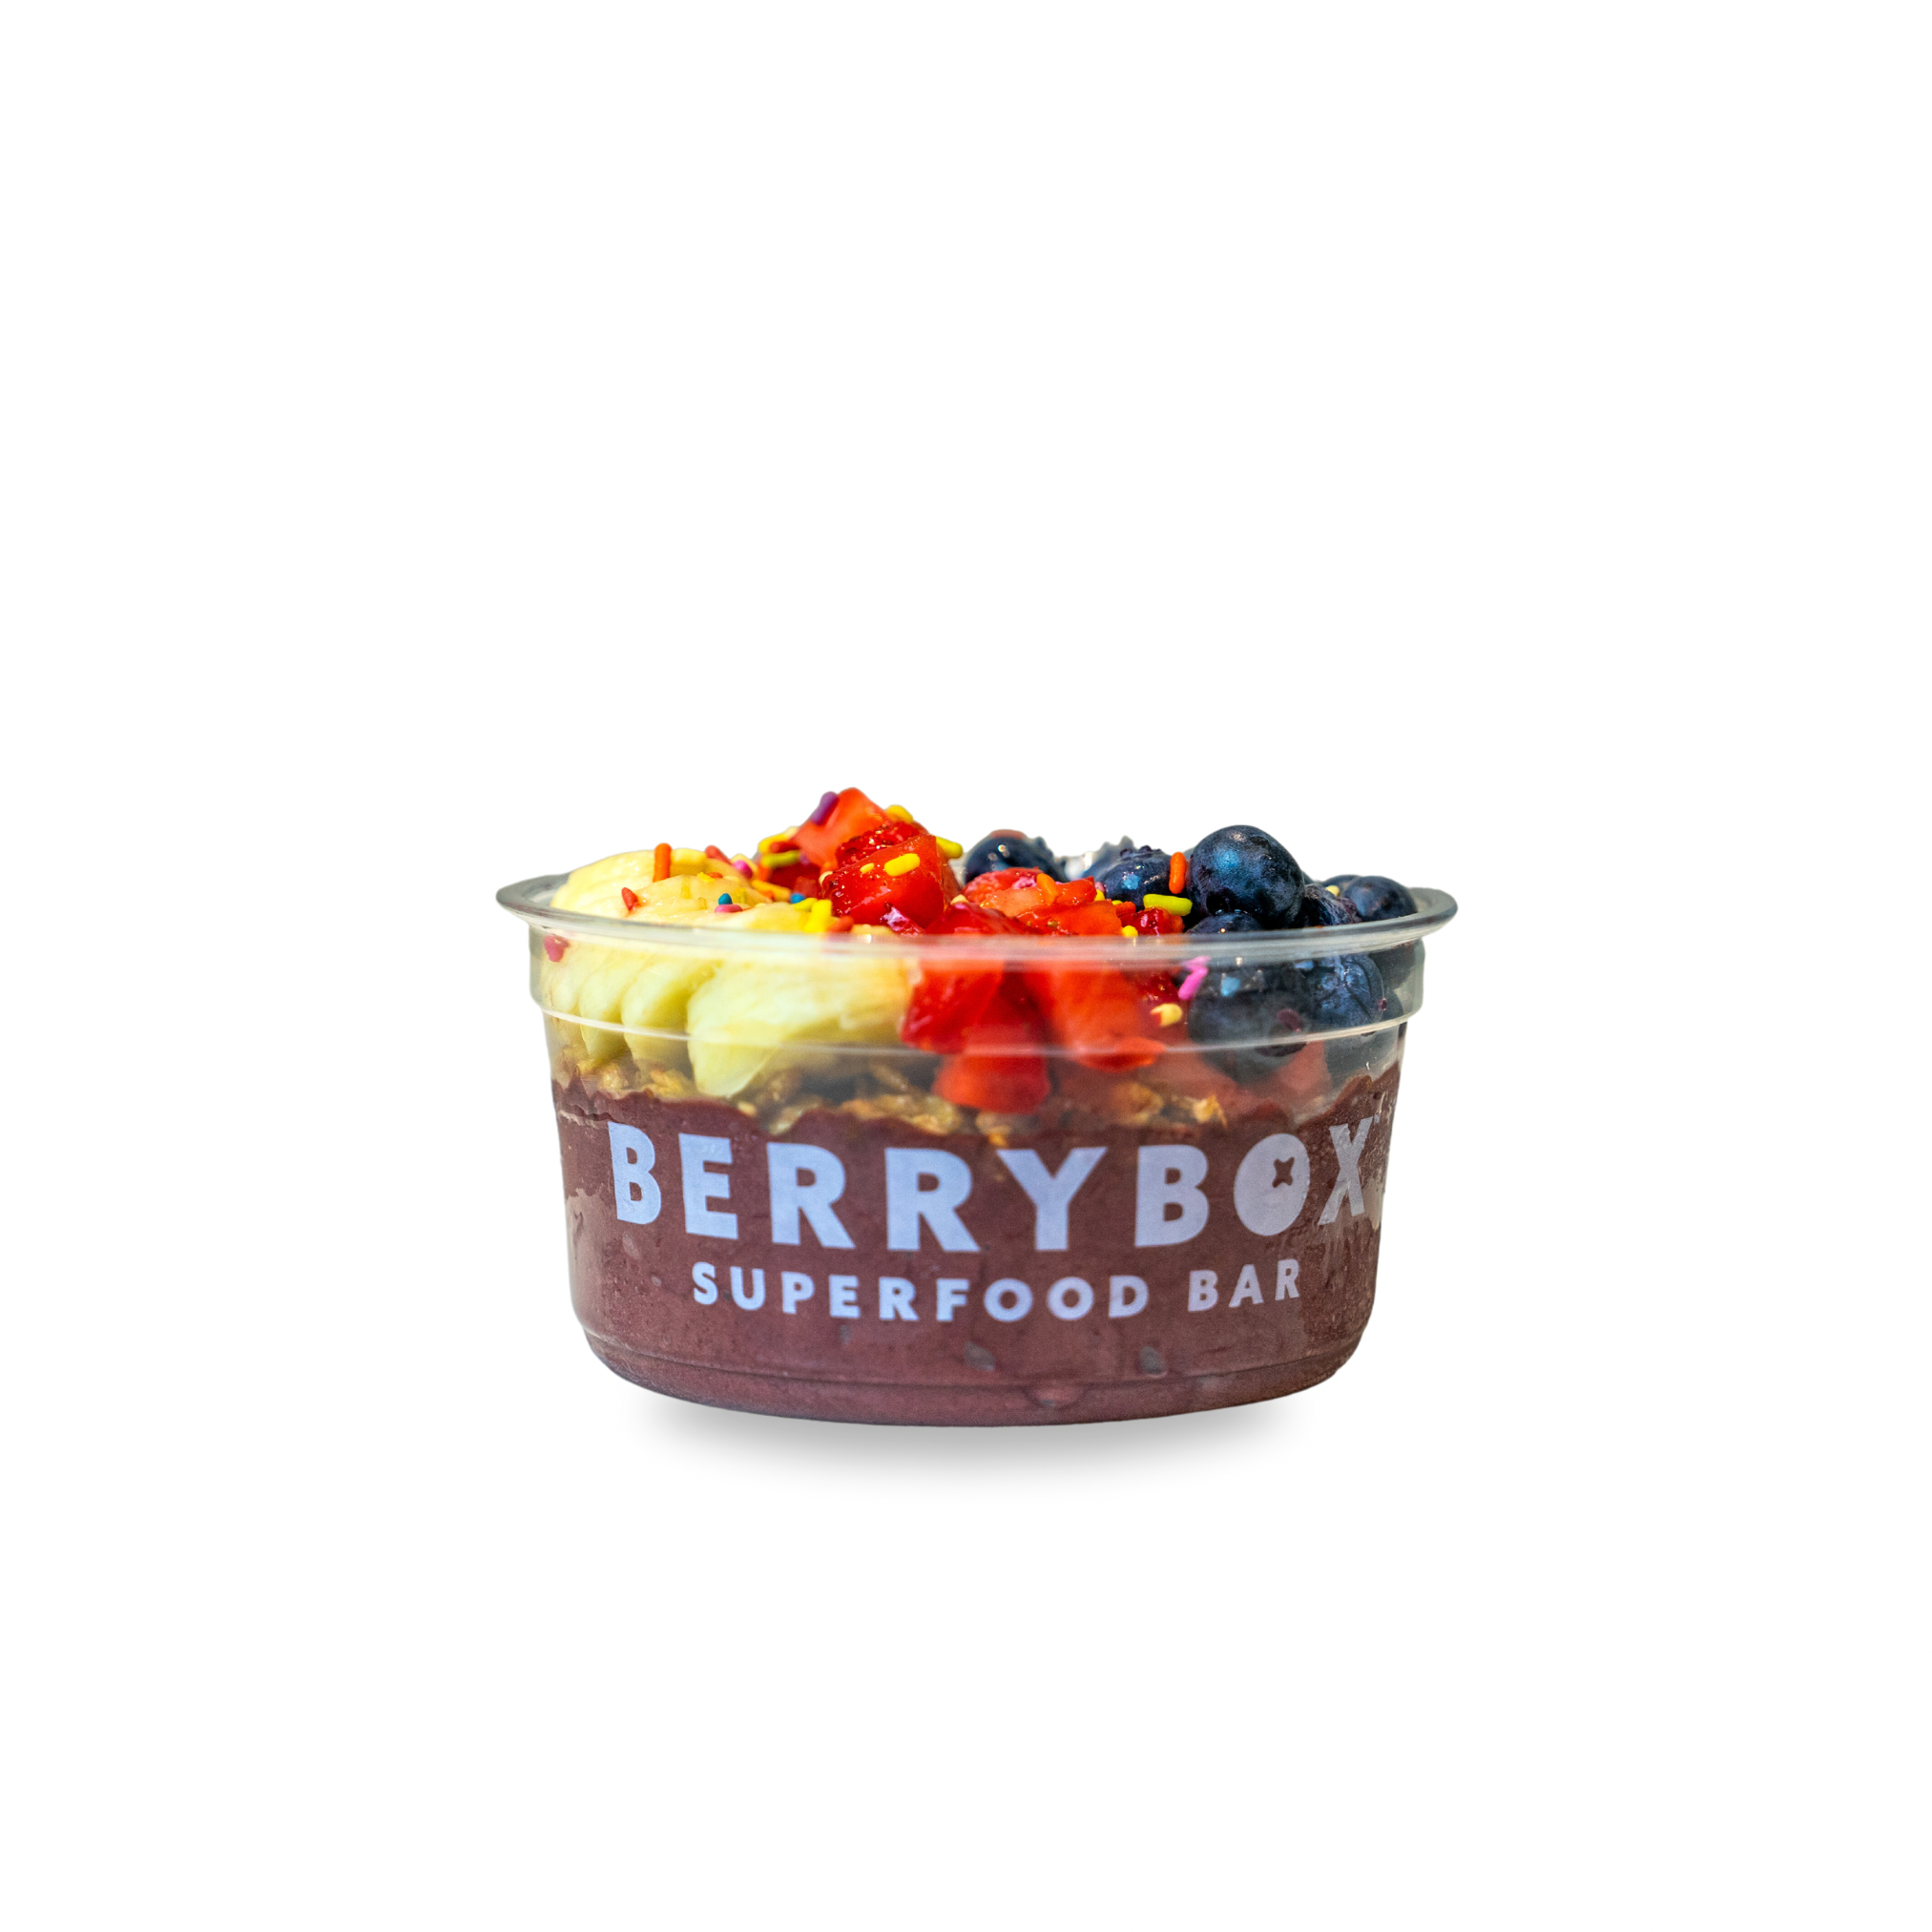 The Fruity Peb-Bowl